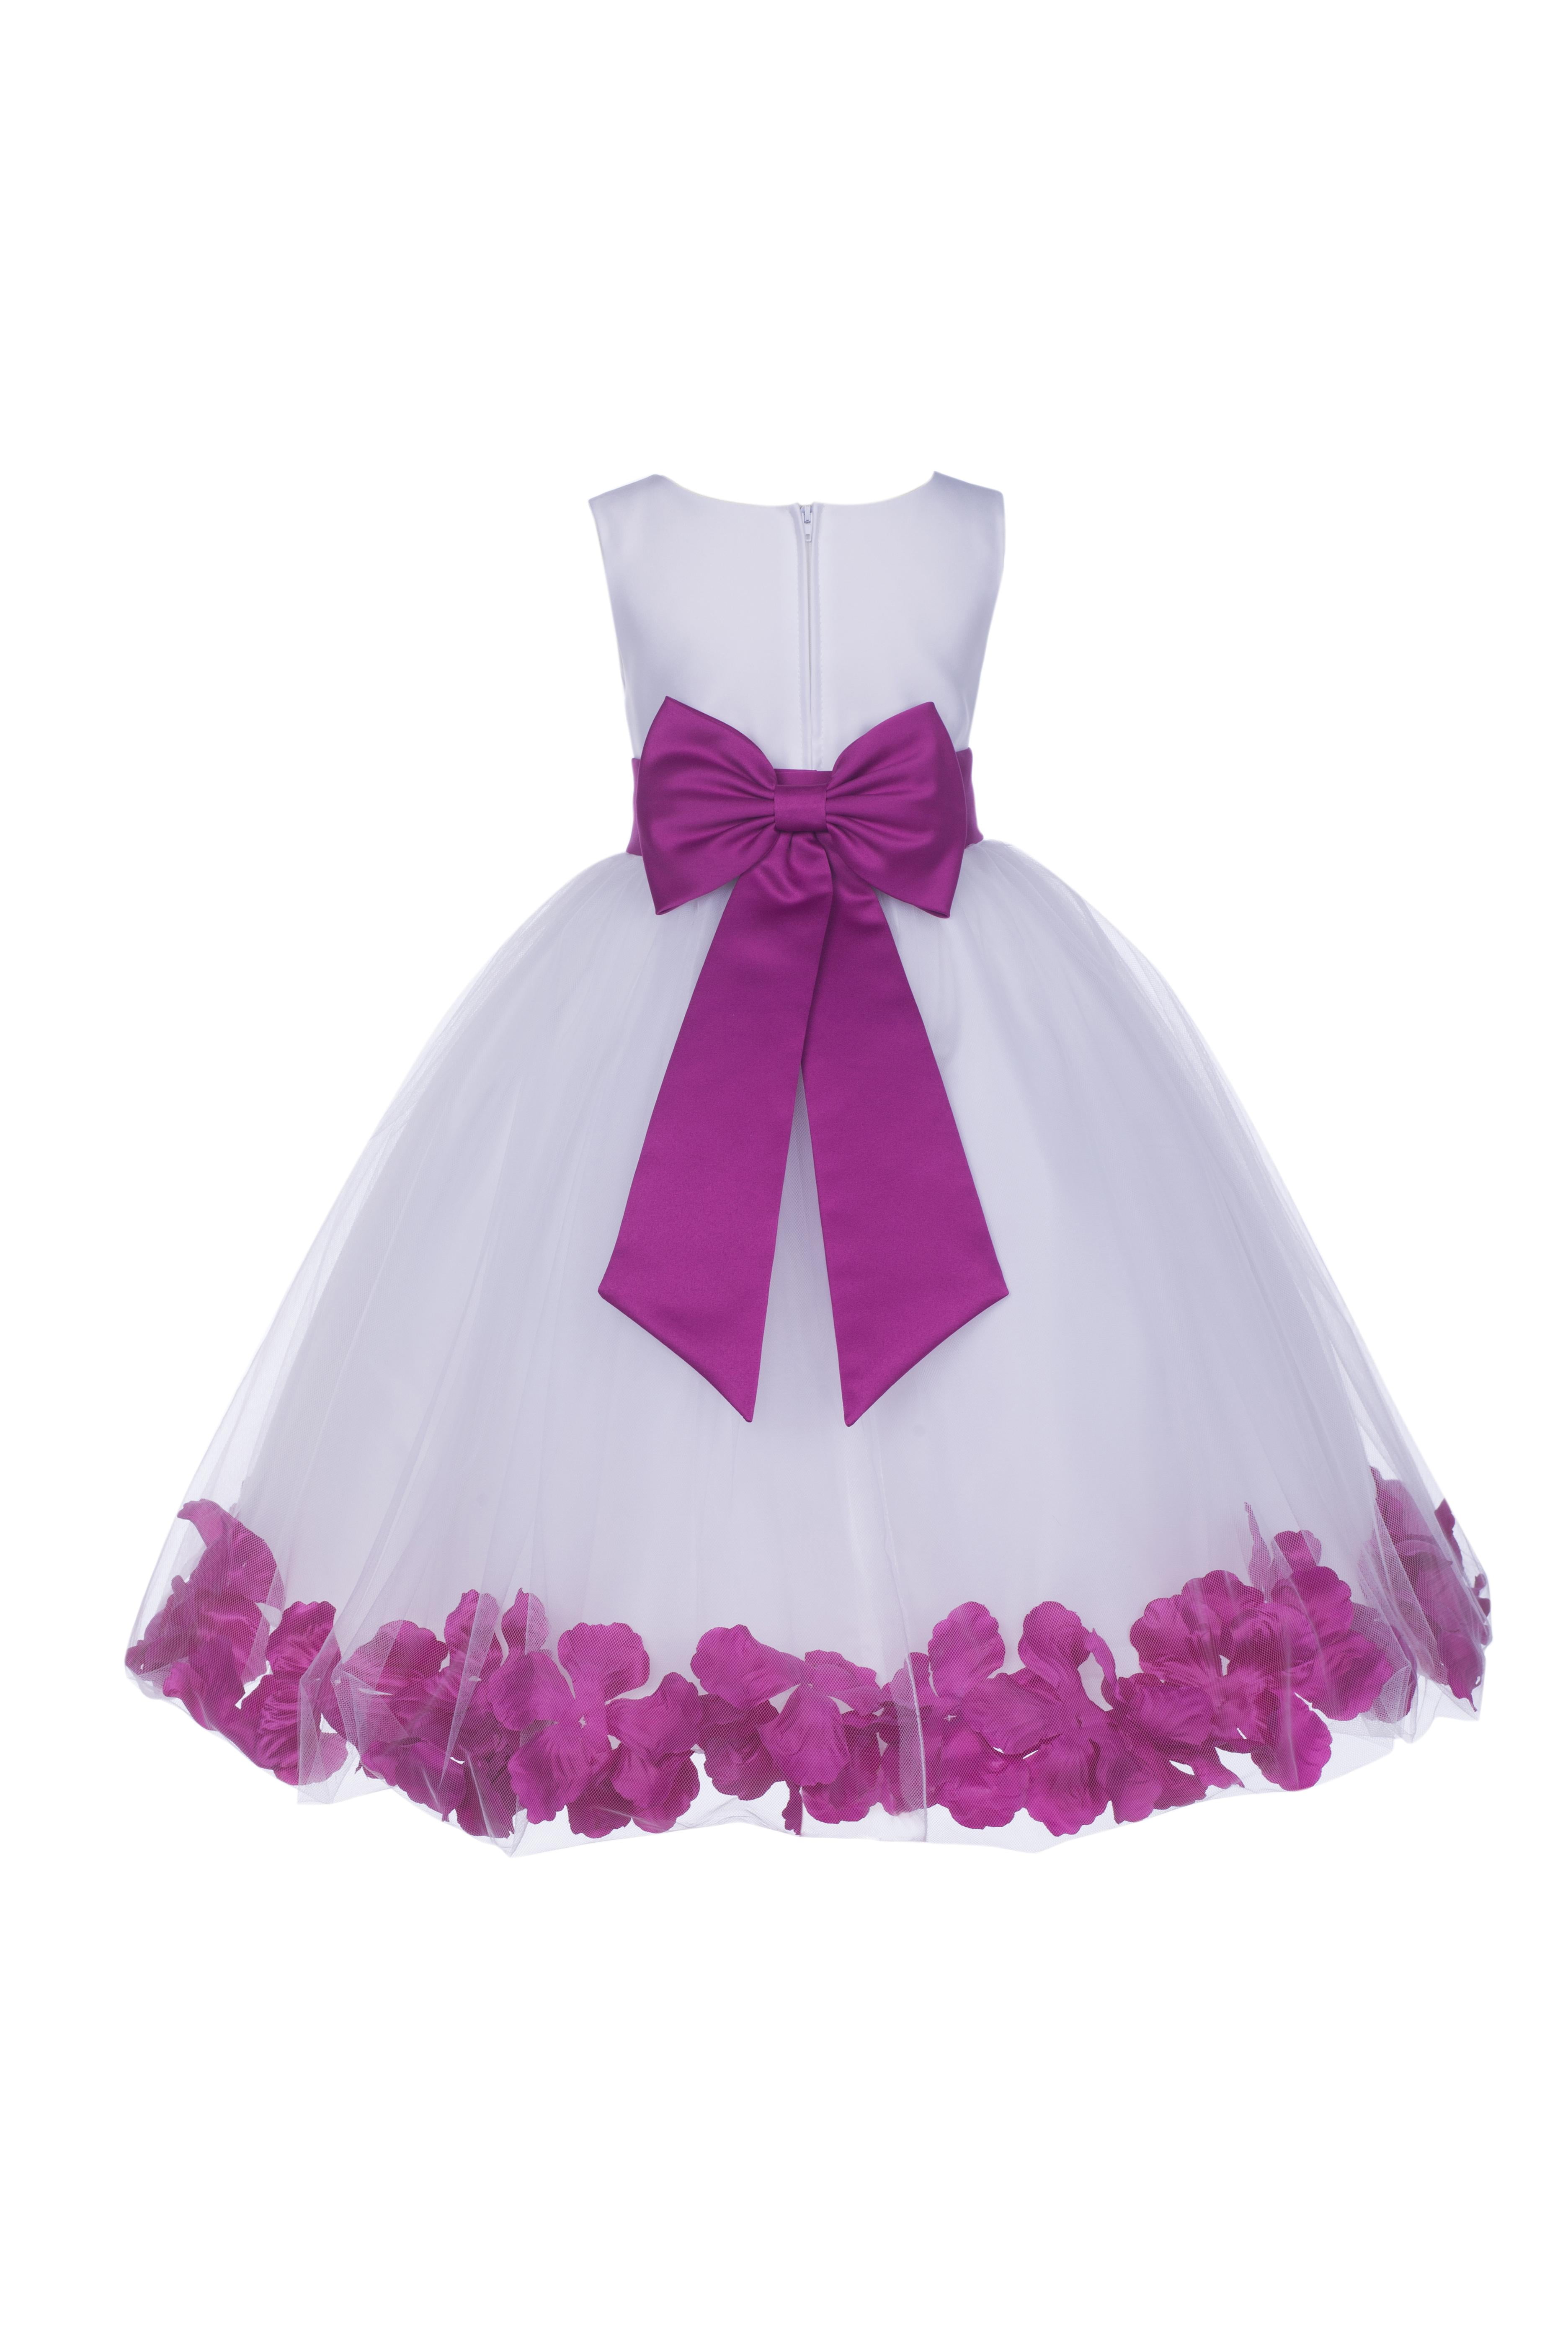 White Flower Girl Dress Rose Petal Junior Bridesmaid Easter Holiday Pageant Kids 